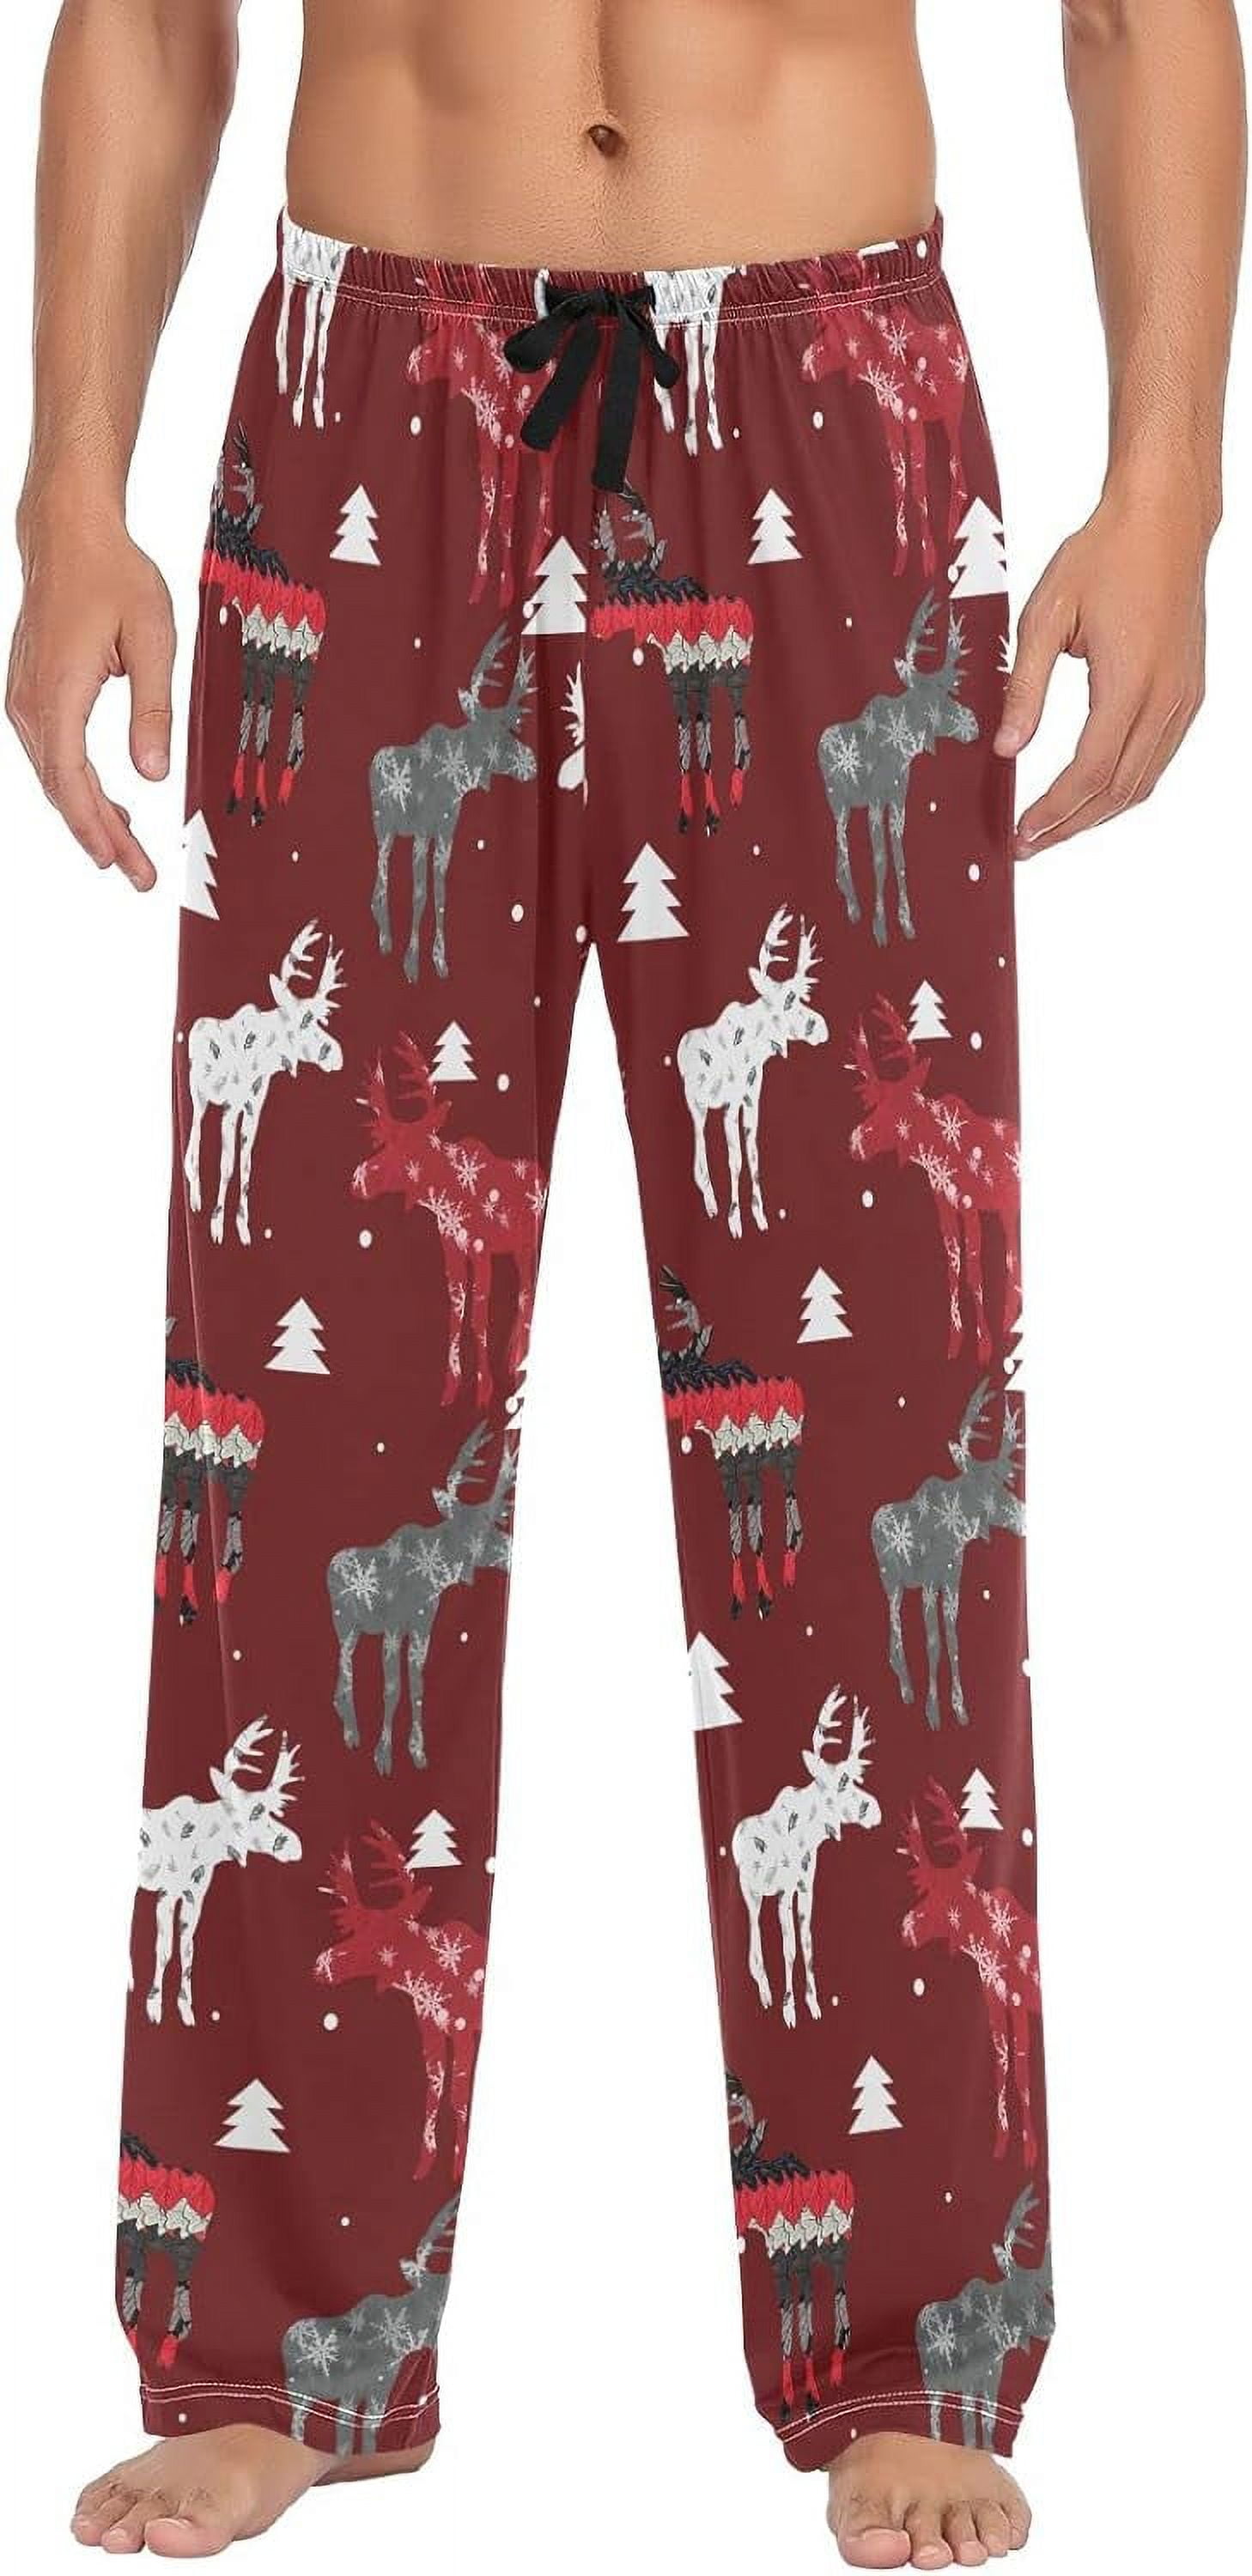 GZHJMY Men's Pajama Pants Sleepwear Lounge Pajama Bottoms with Pocket ...